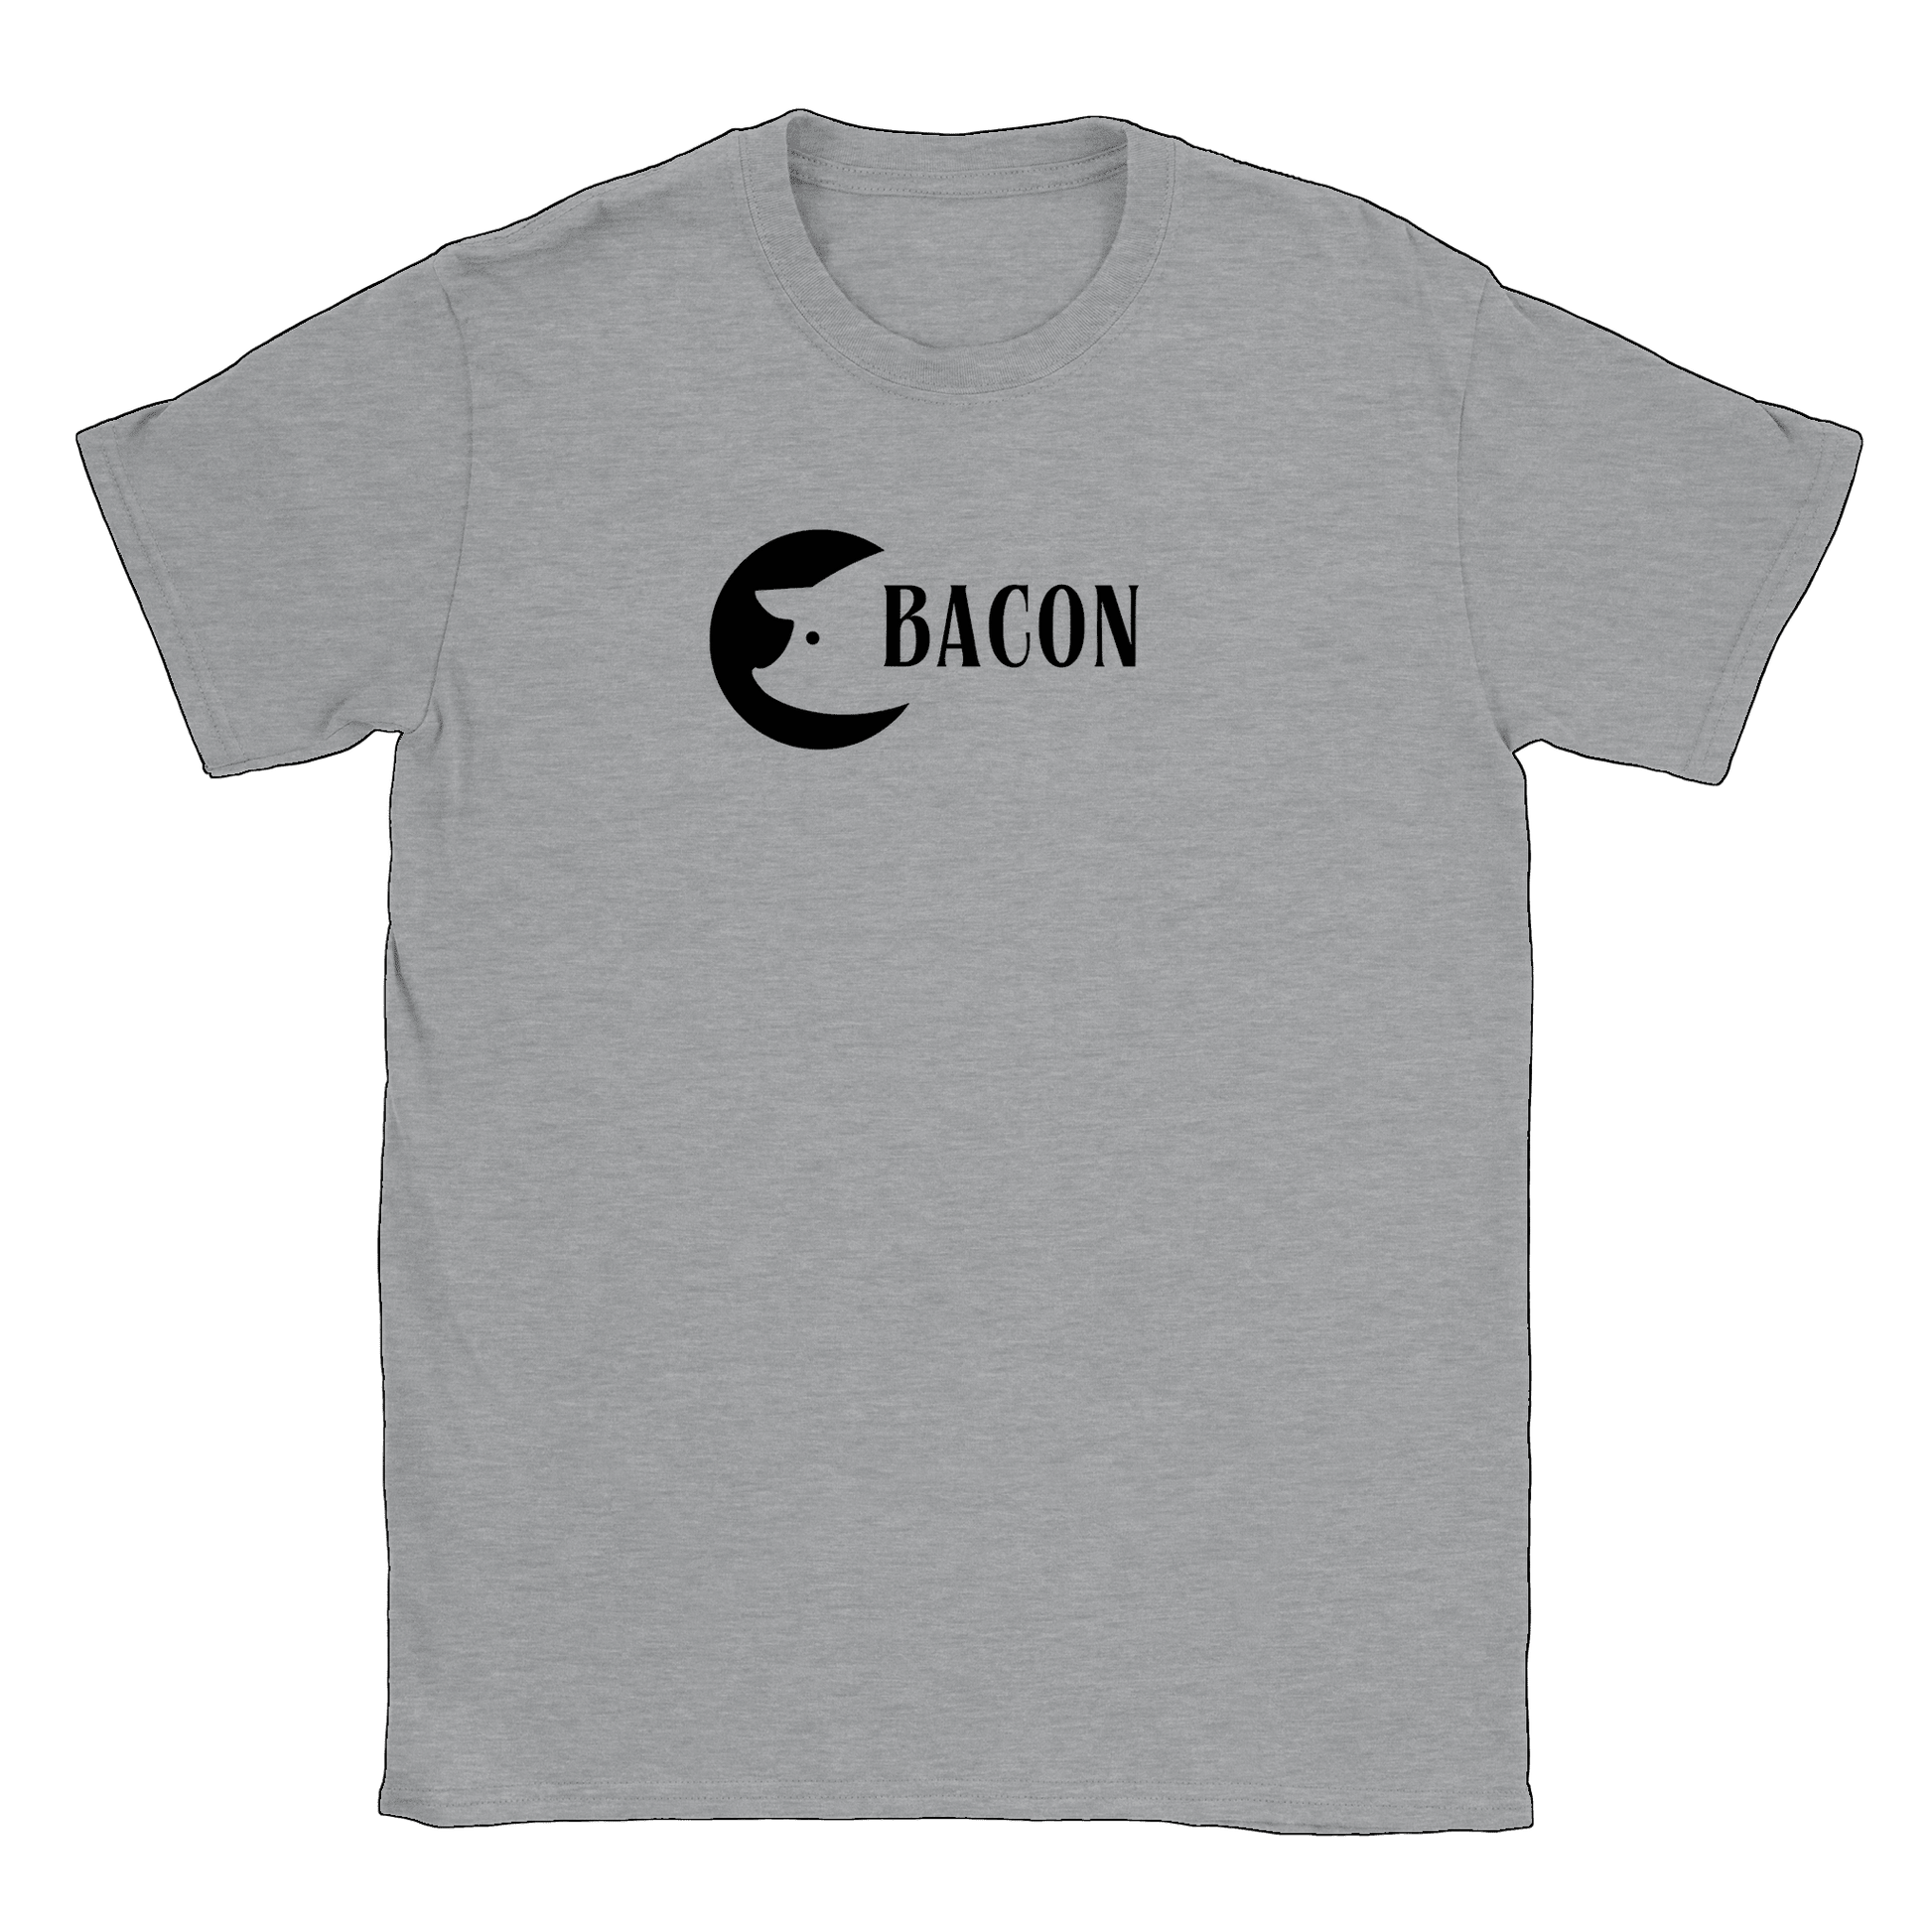 Bacon - T-shirt Sports Grey